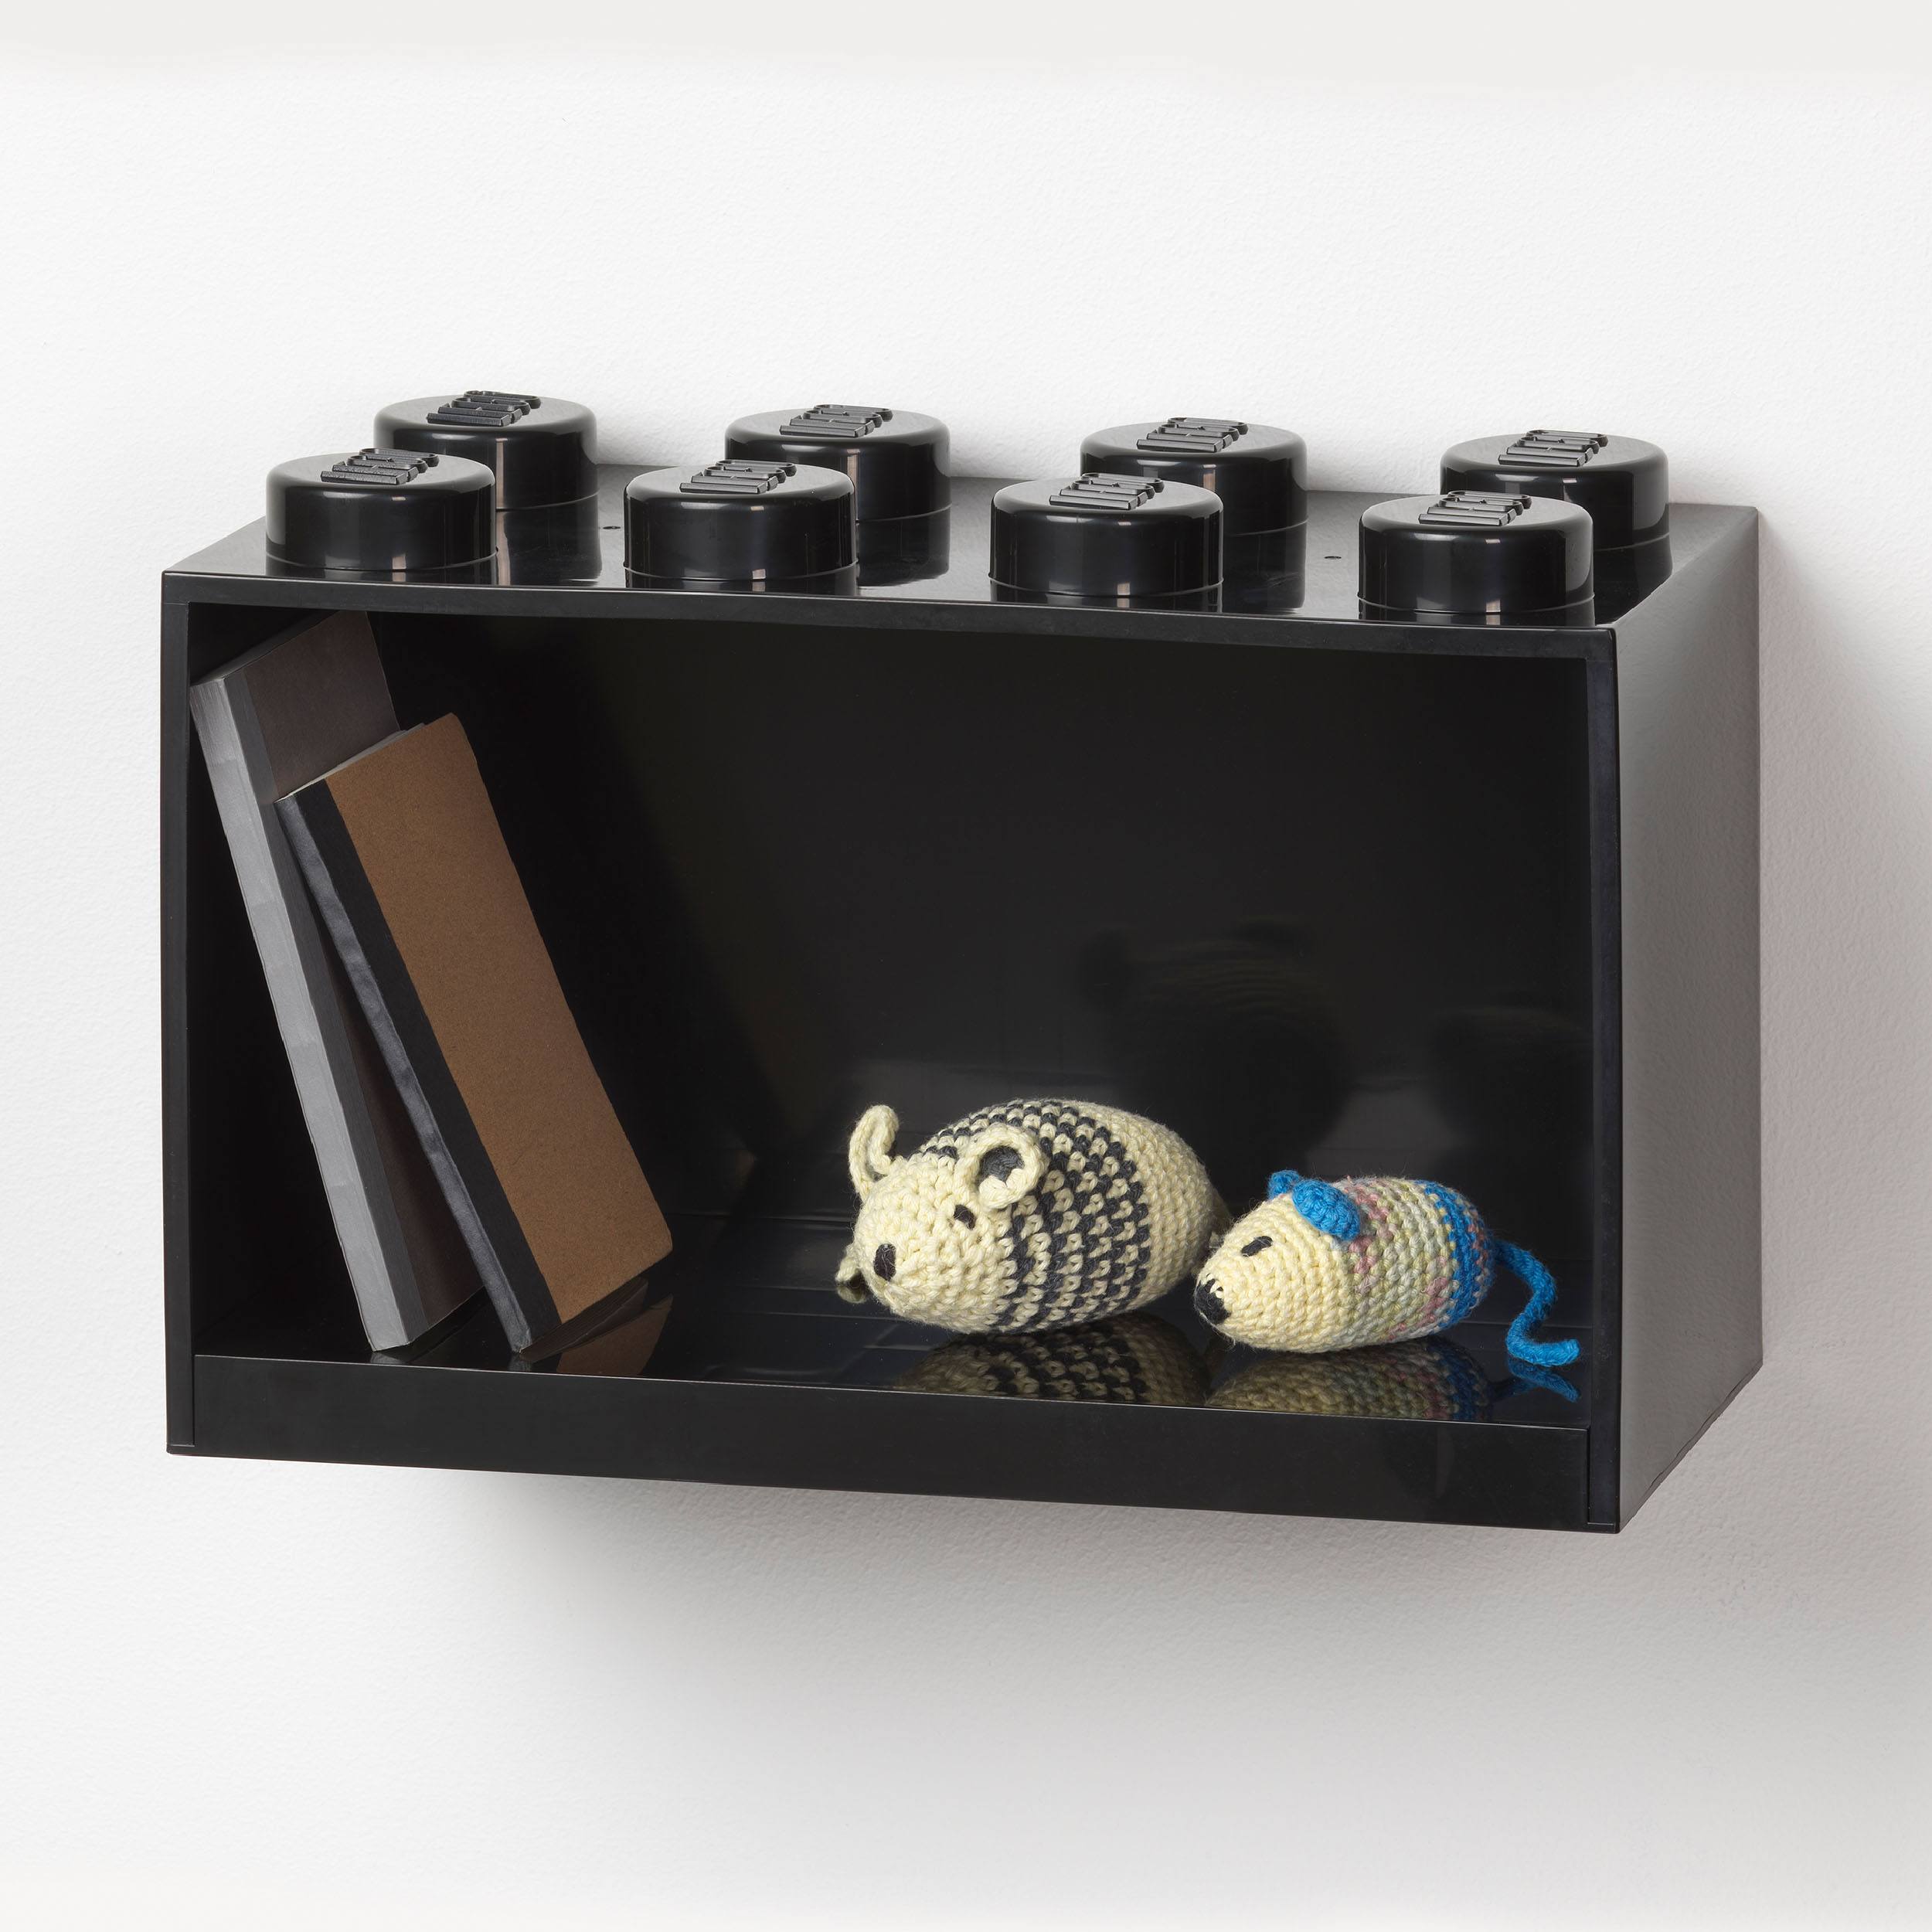 LEGO® Shelf Regal Brick 8